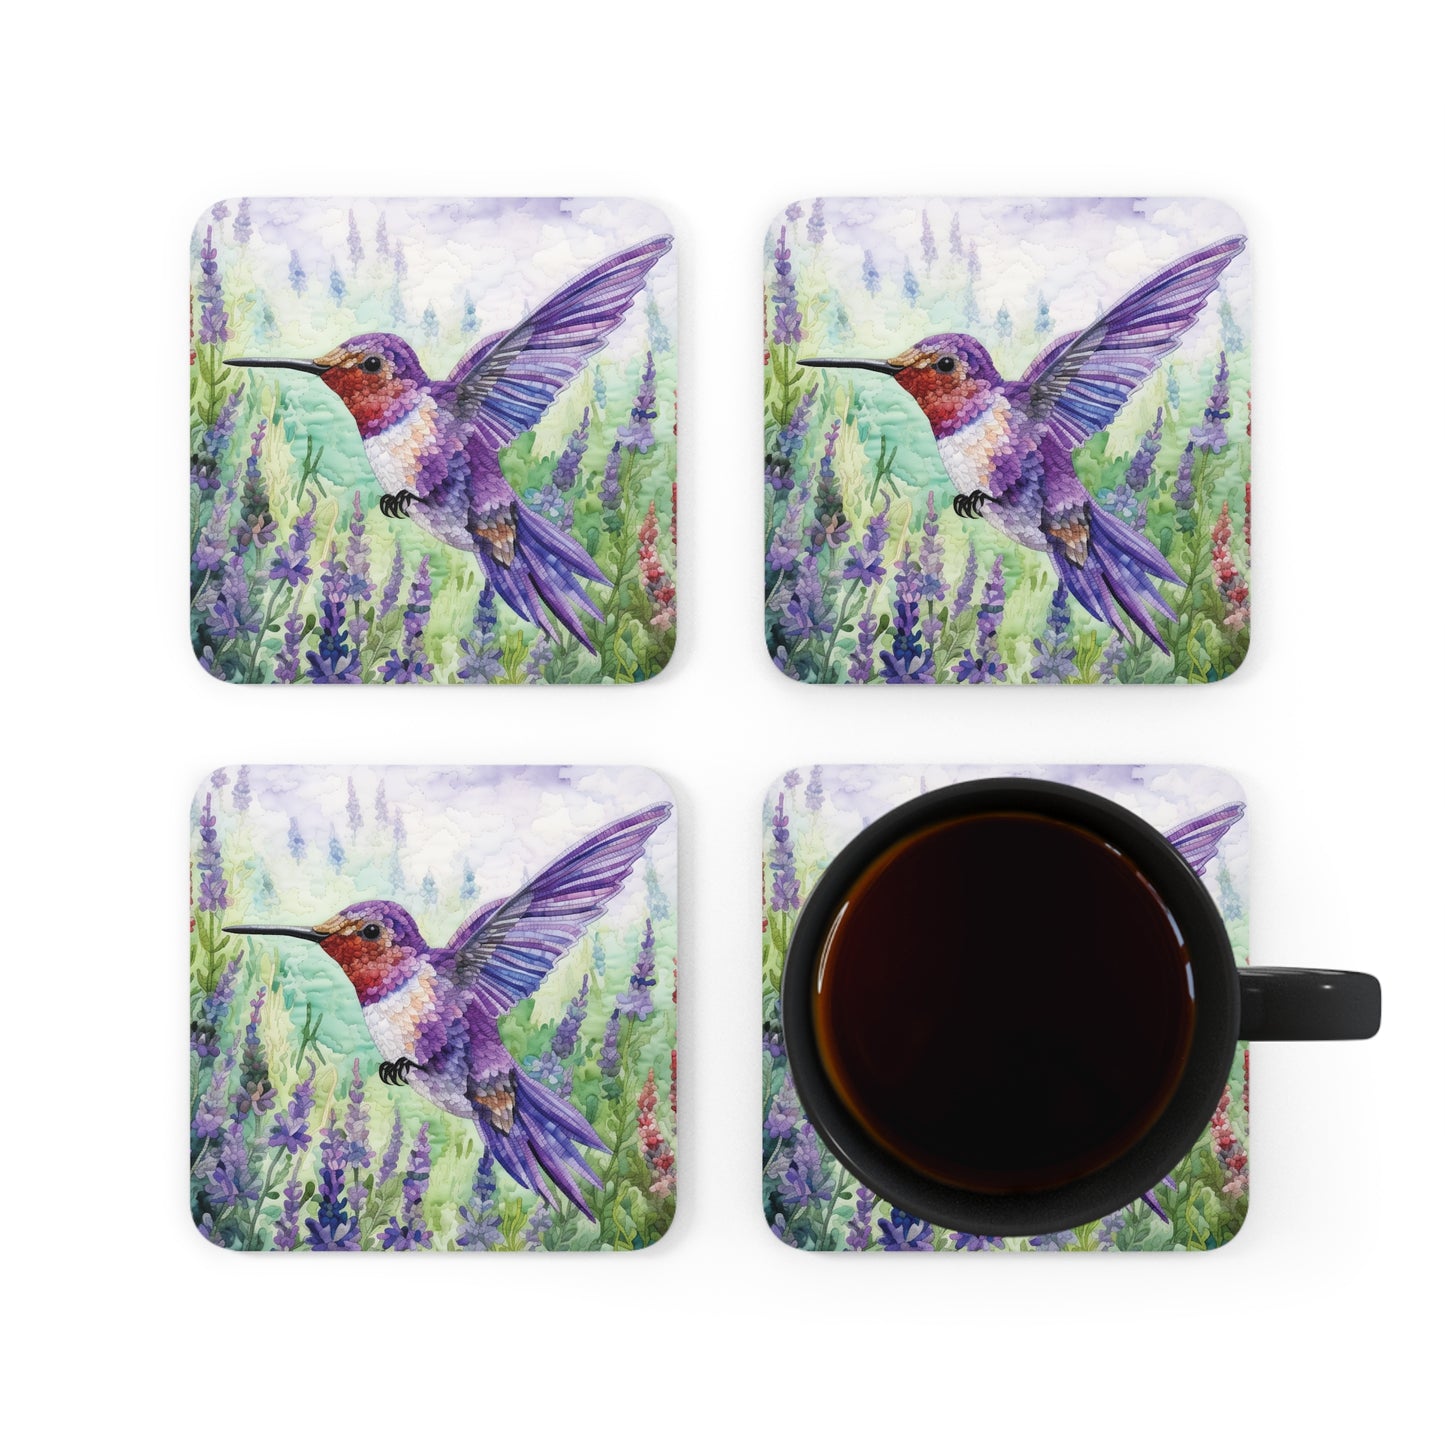 Watercoloured Whispers: Hummingbirds in Lavender Field Coasters (Series 4)